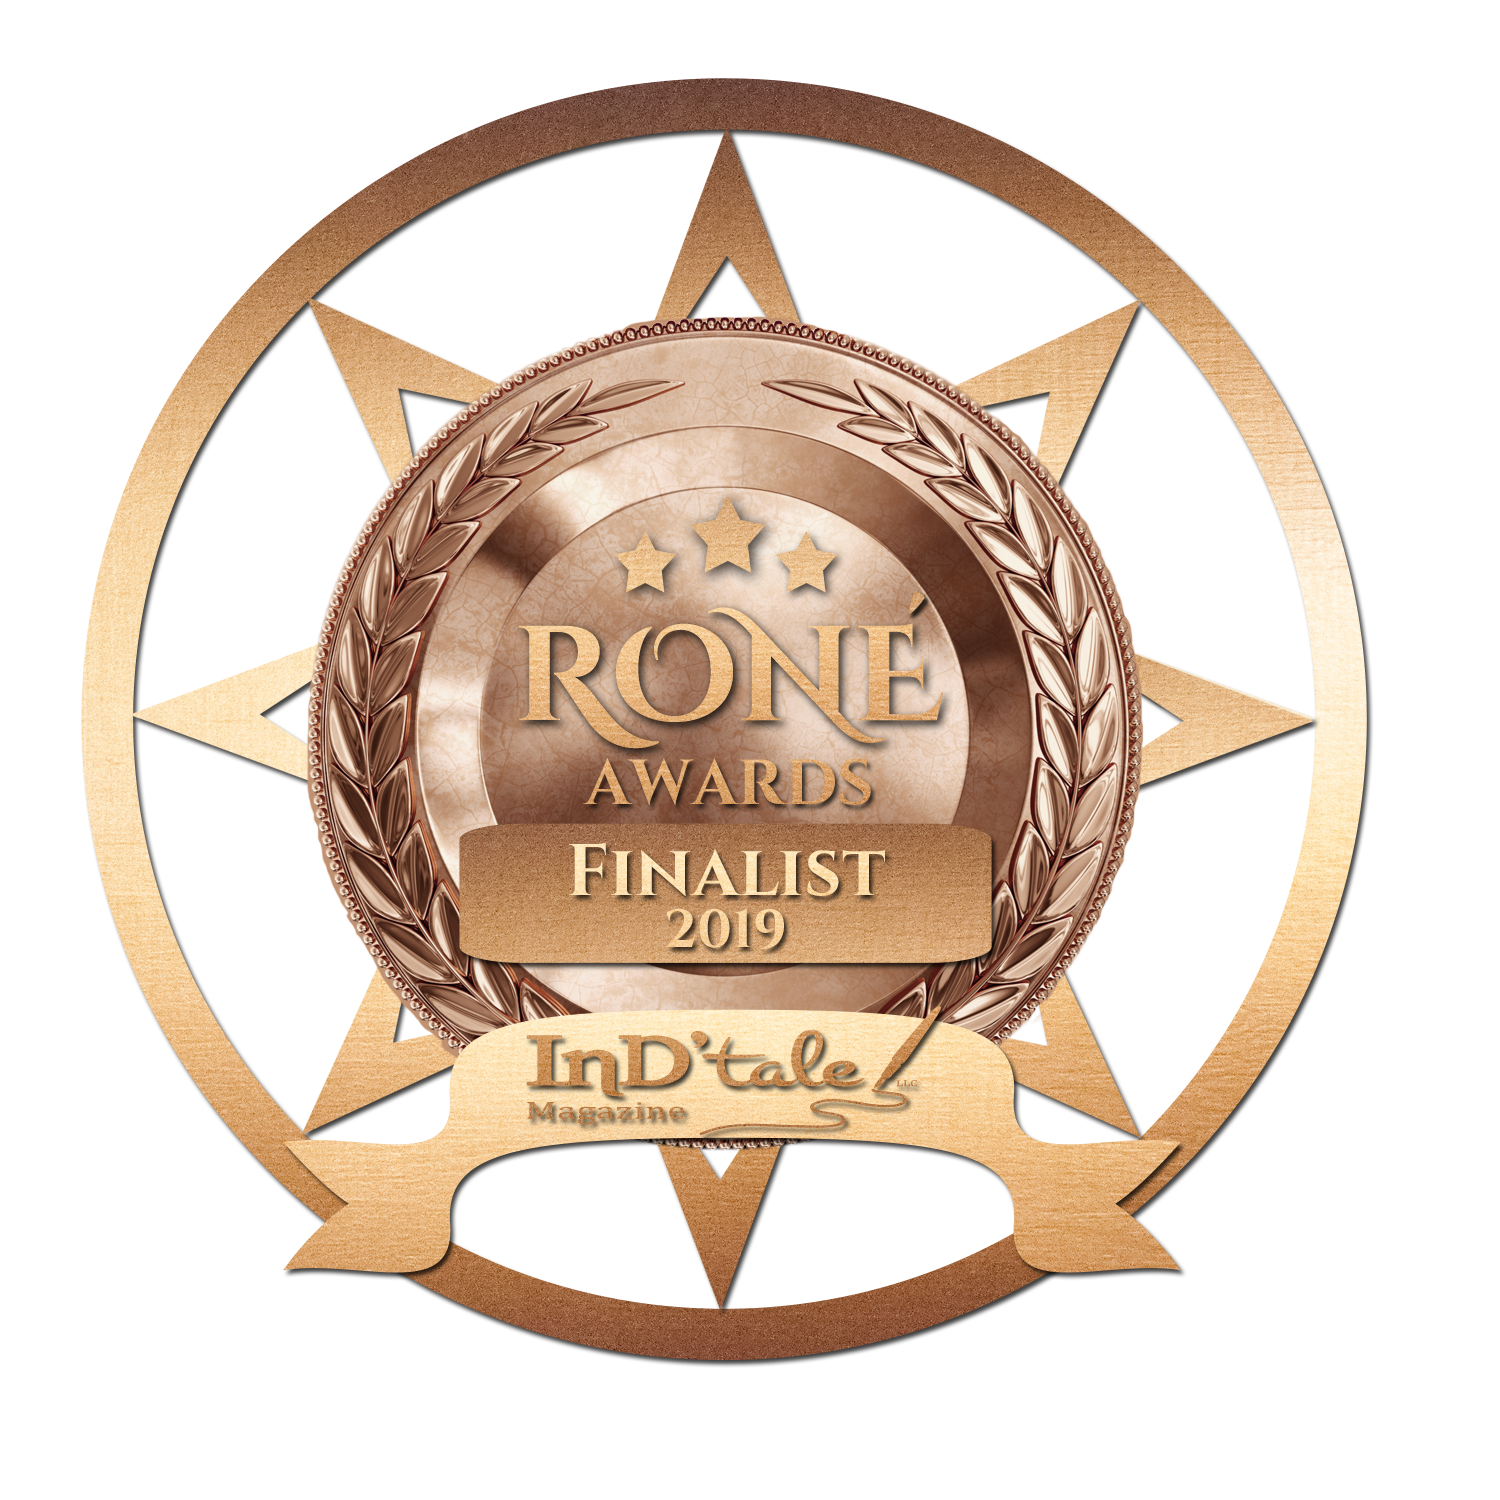 RONE Awards Finalist 2019